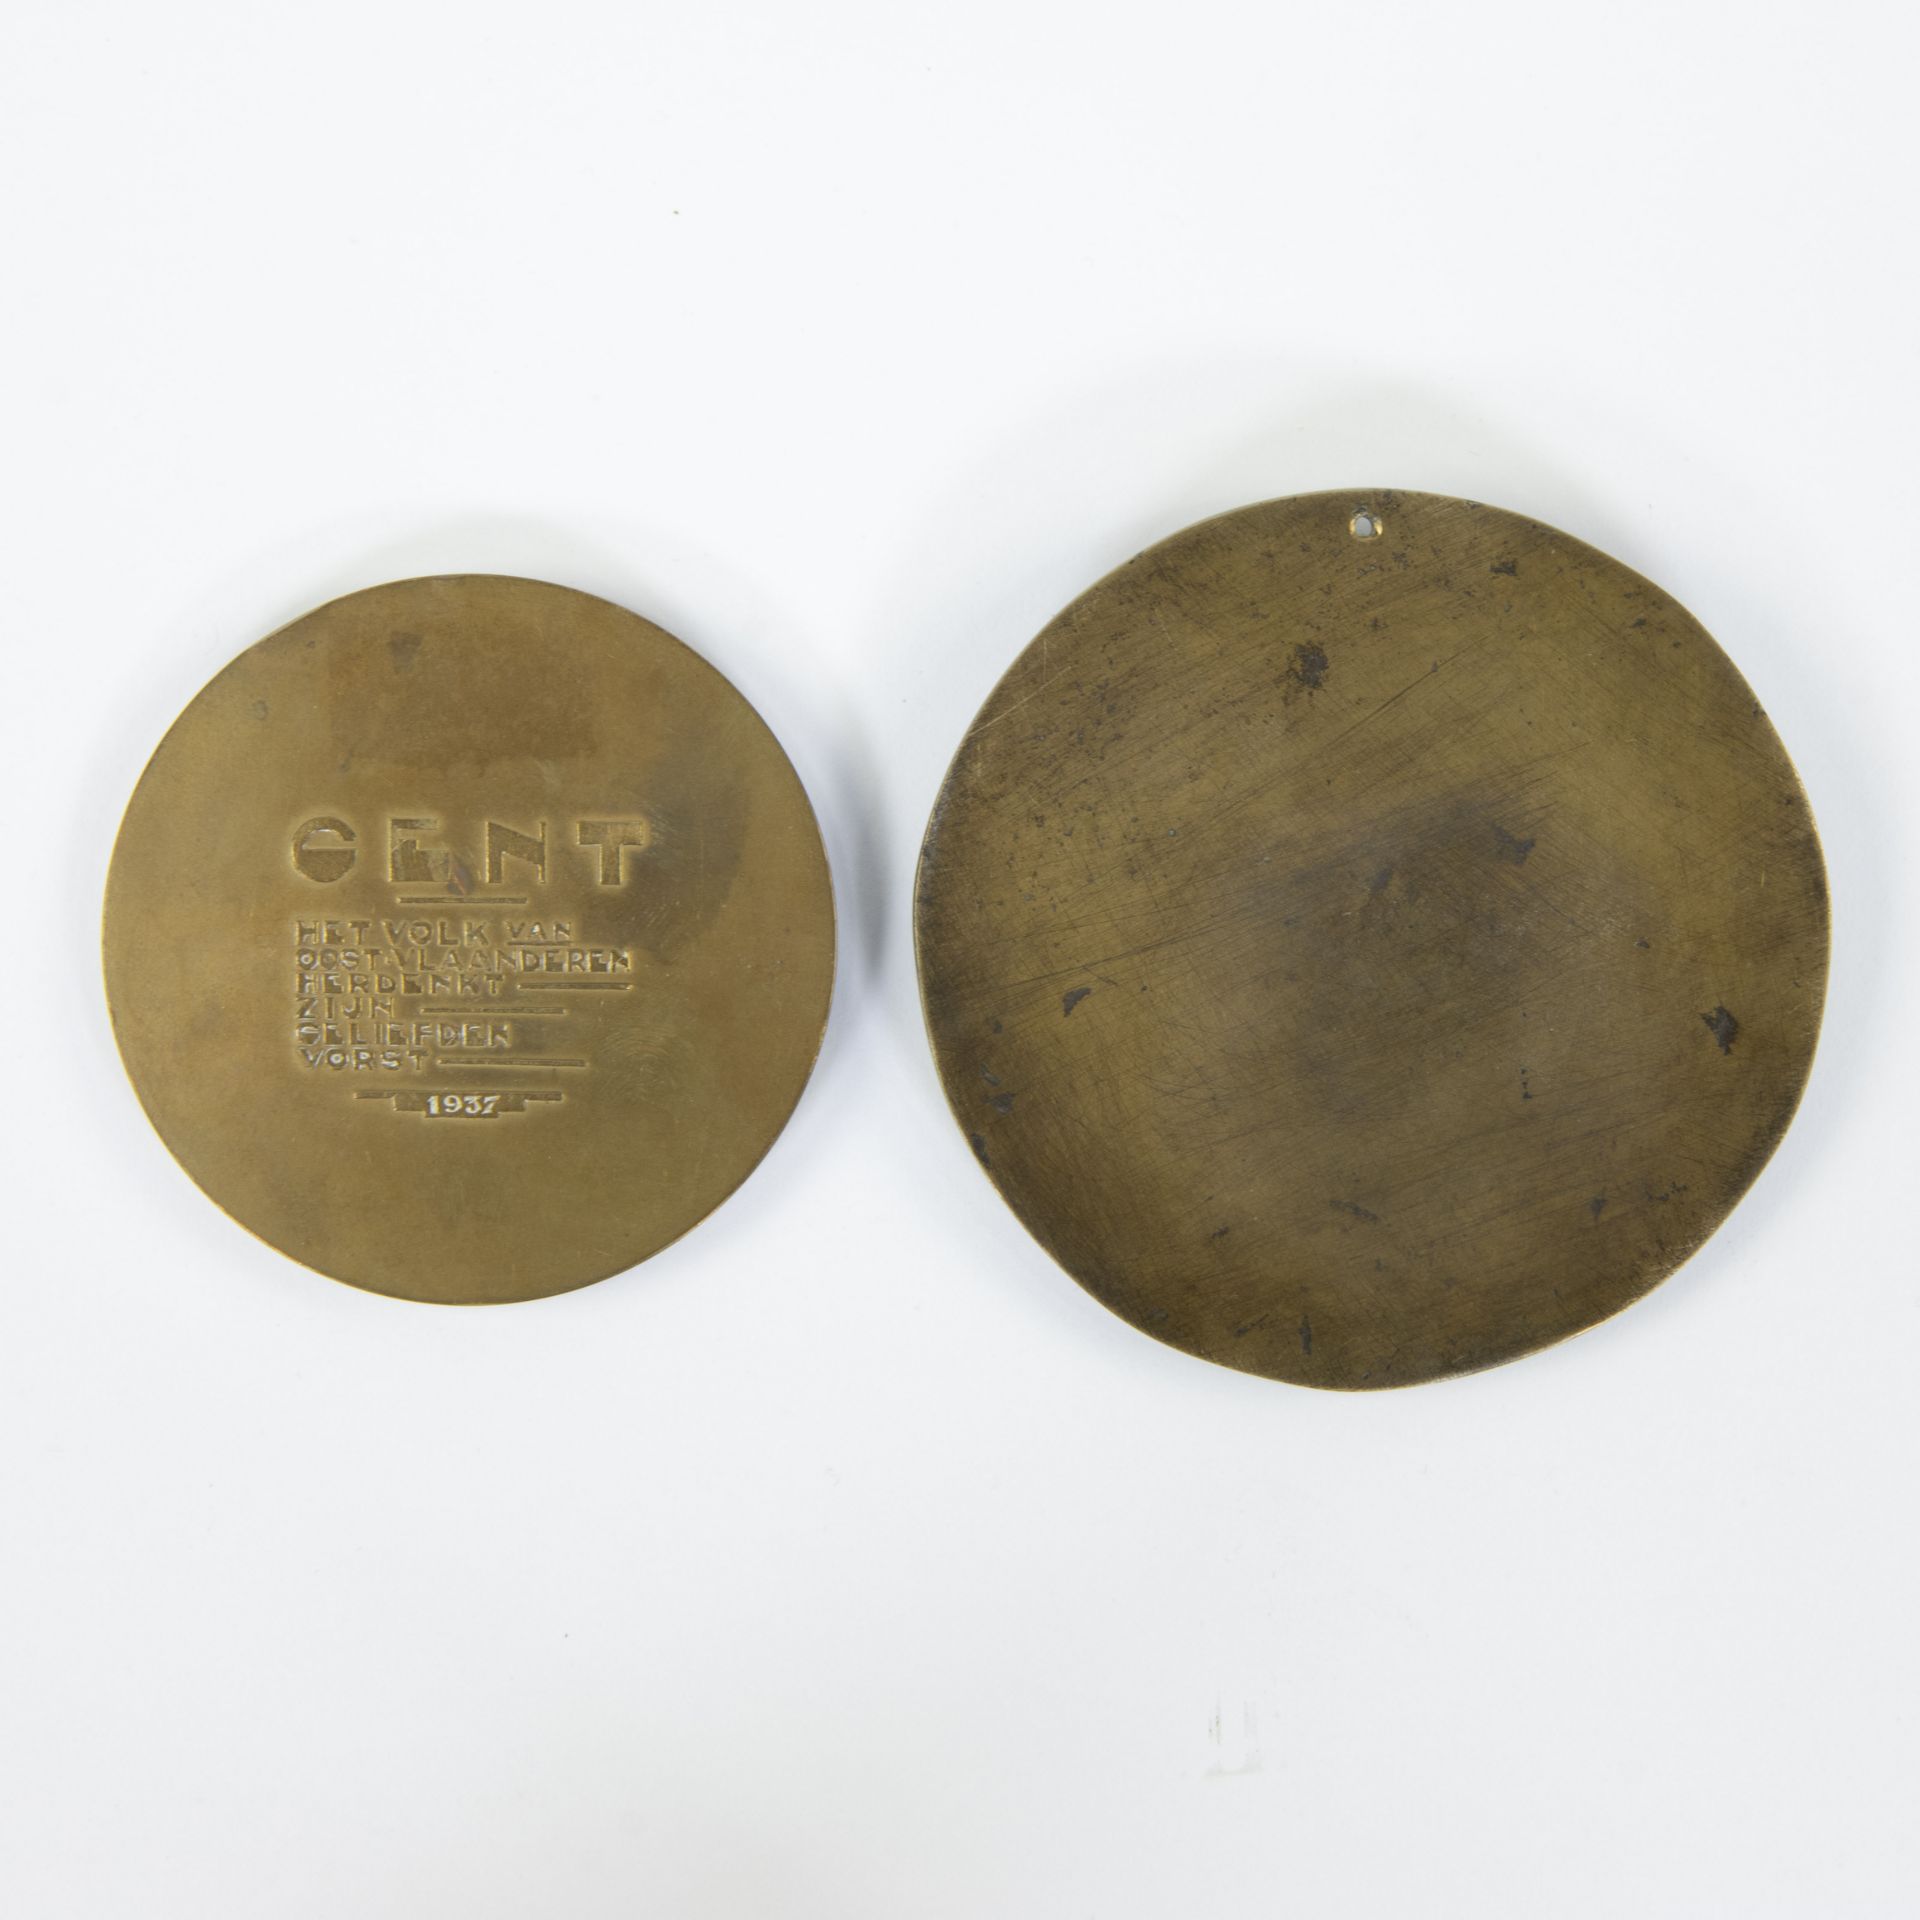 Domien INGELS (1881-1946), 2 bronze medals, signed - Image 3 of 3